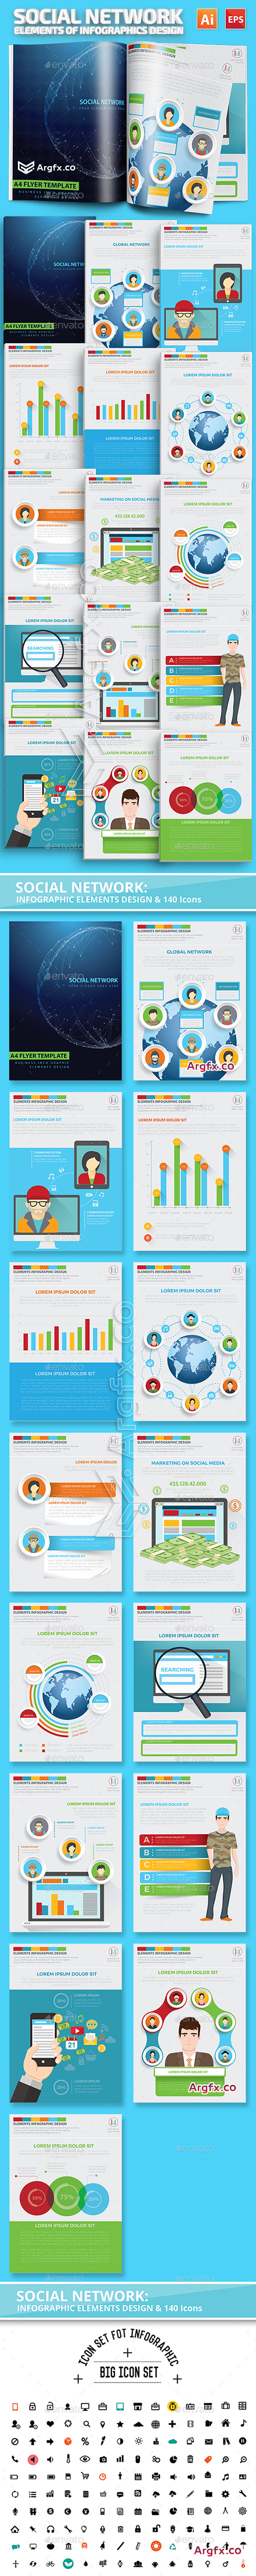 Social Network Infographics Design